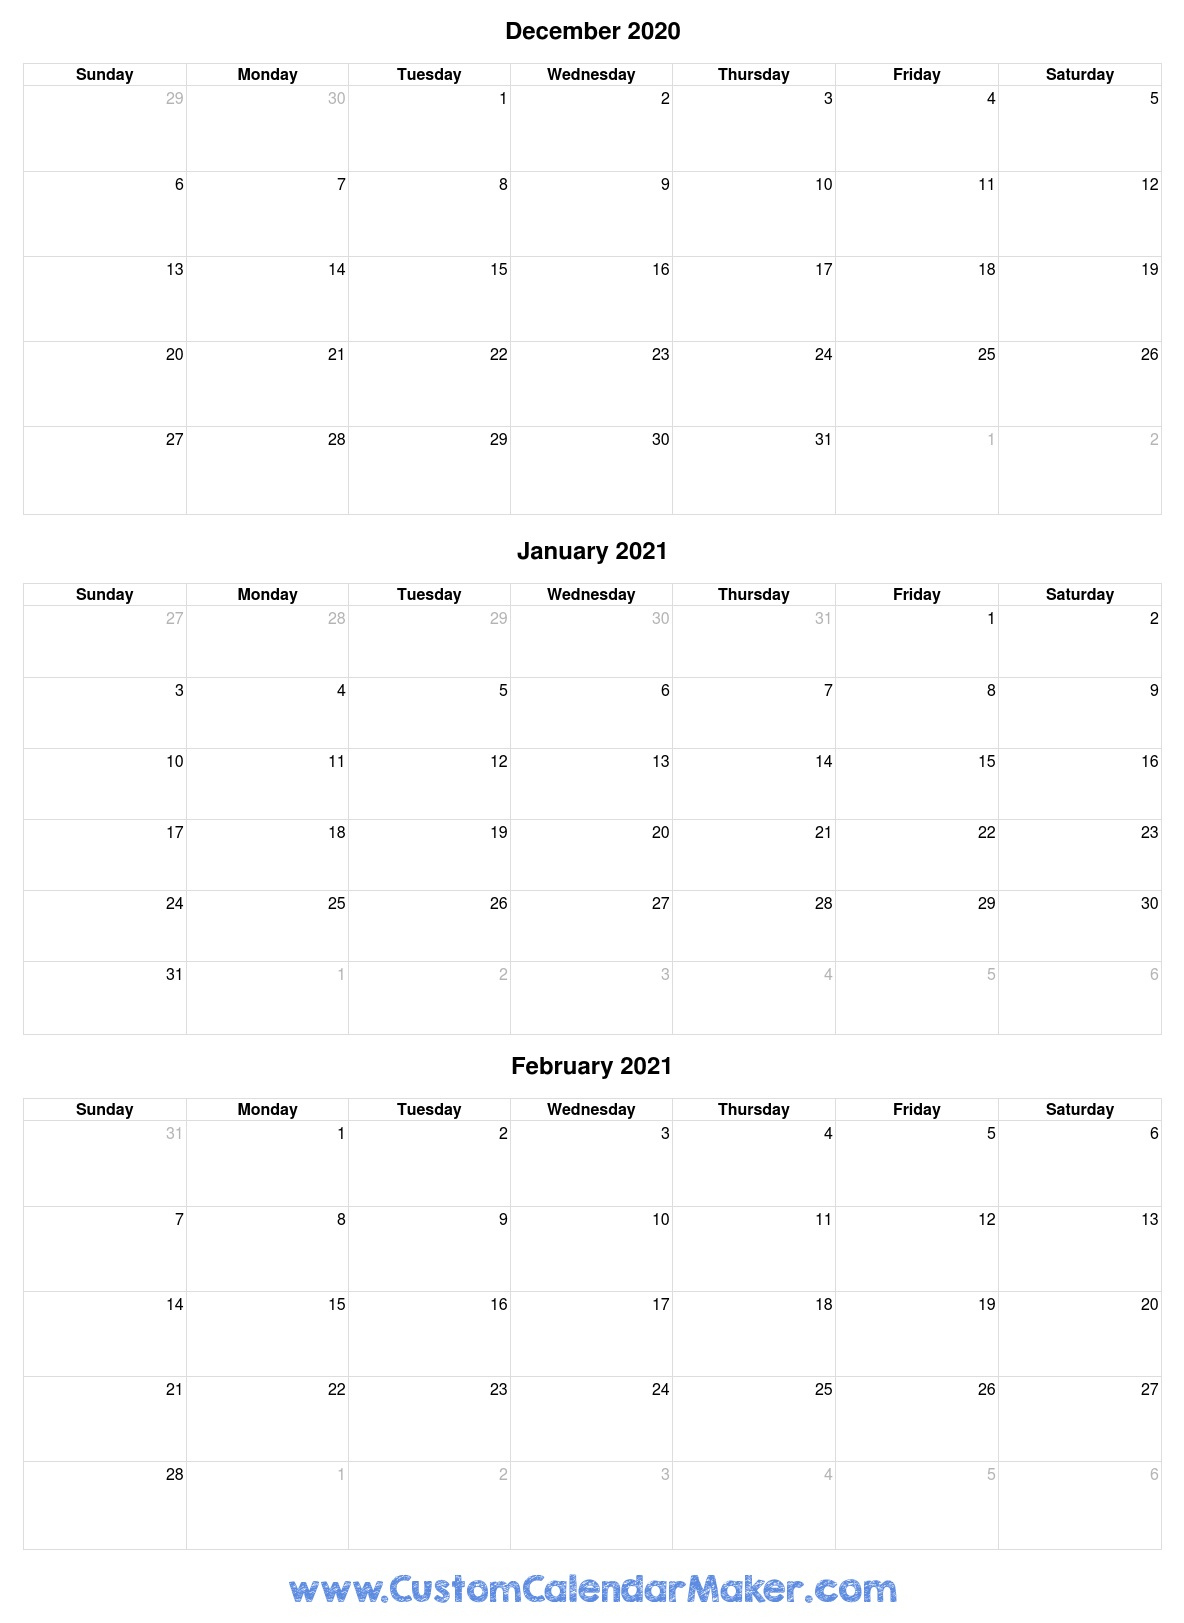 December 2020 Printable Calendars - Blank Pdf Templates Calendar For December 2020 And January 2021